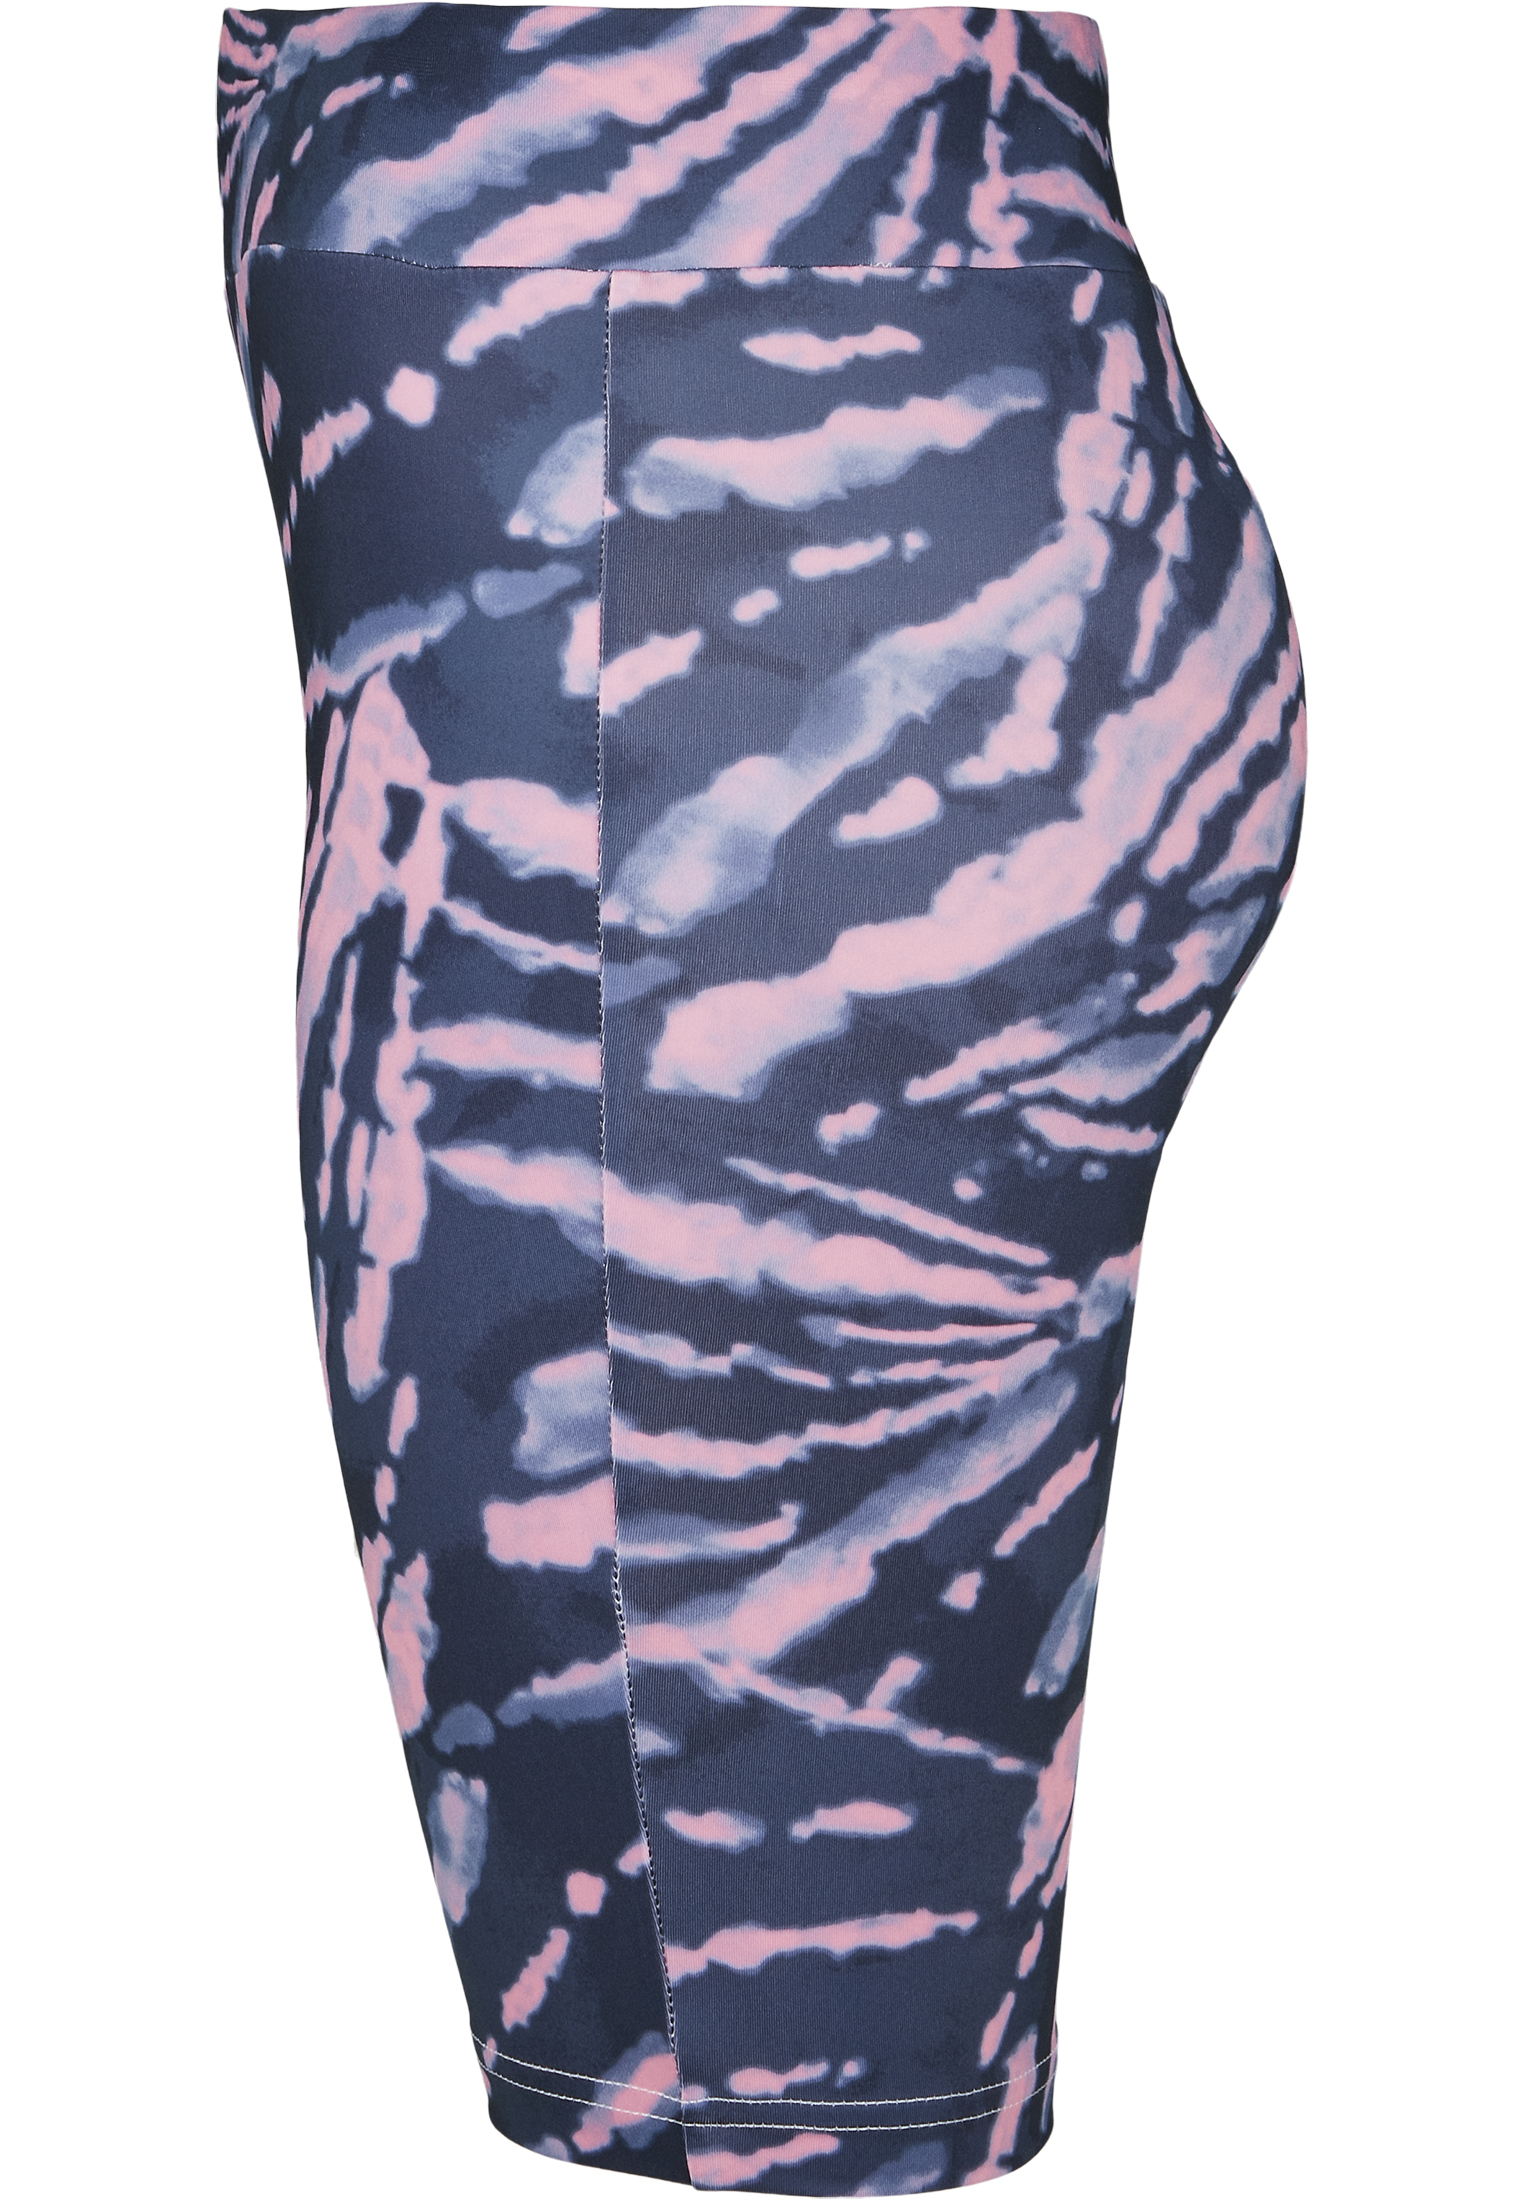 Curvy Ladies Tie Dye Cycling Shorts in Farbe darkshadow/pink